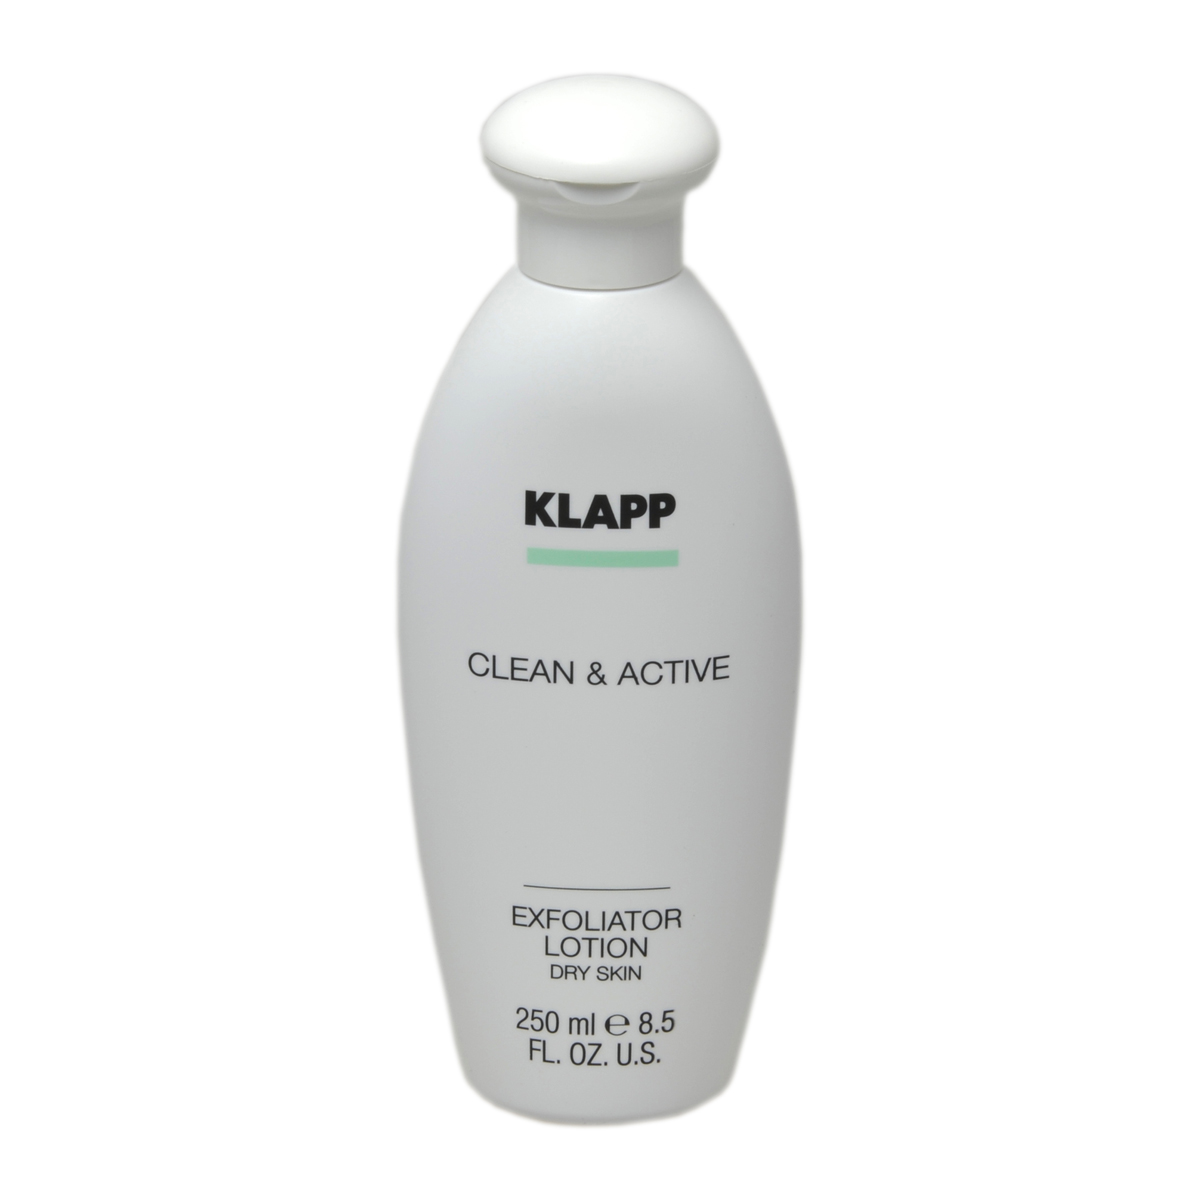 KLAPP Clean Active Exfoliator Lotion Dry Skin 250 ml